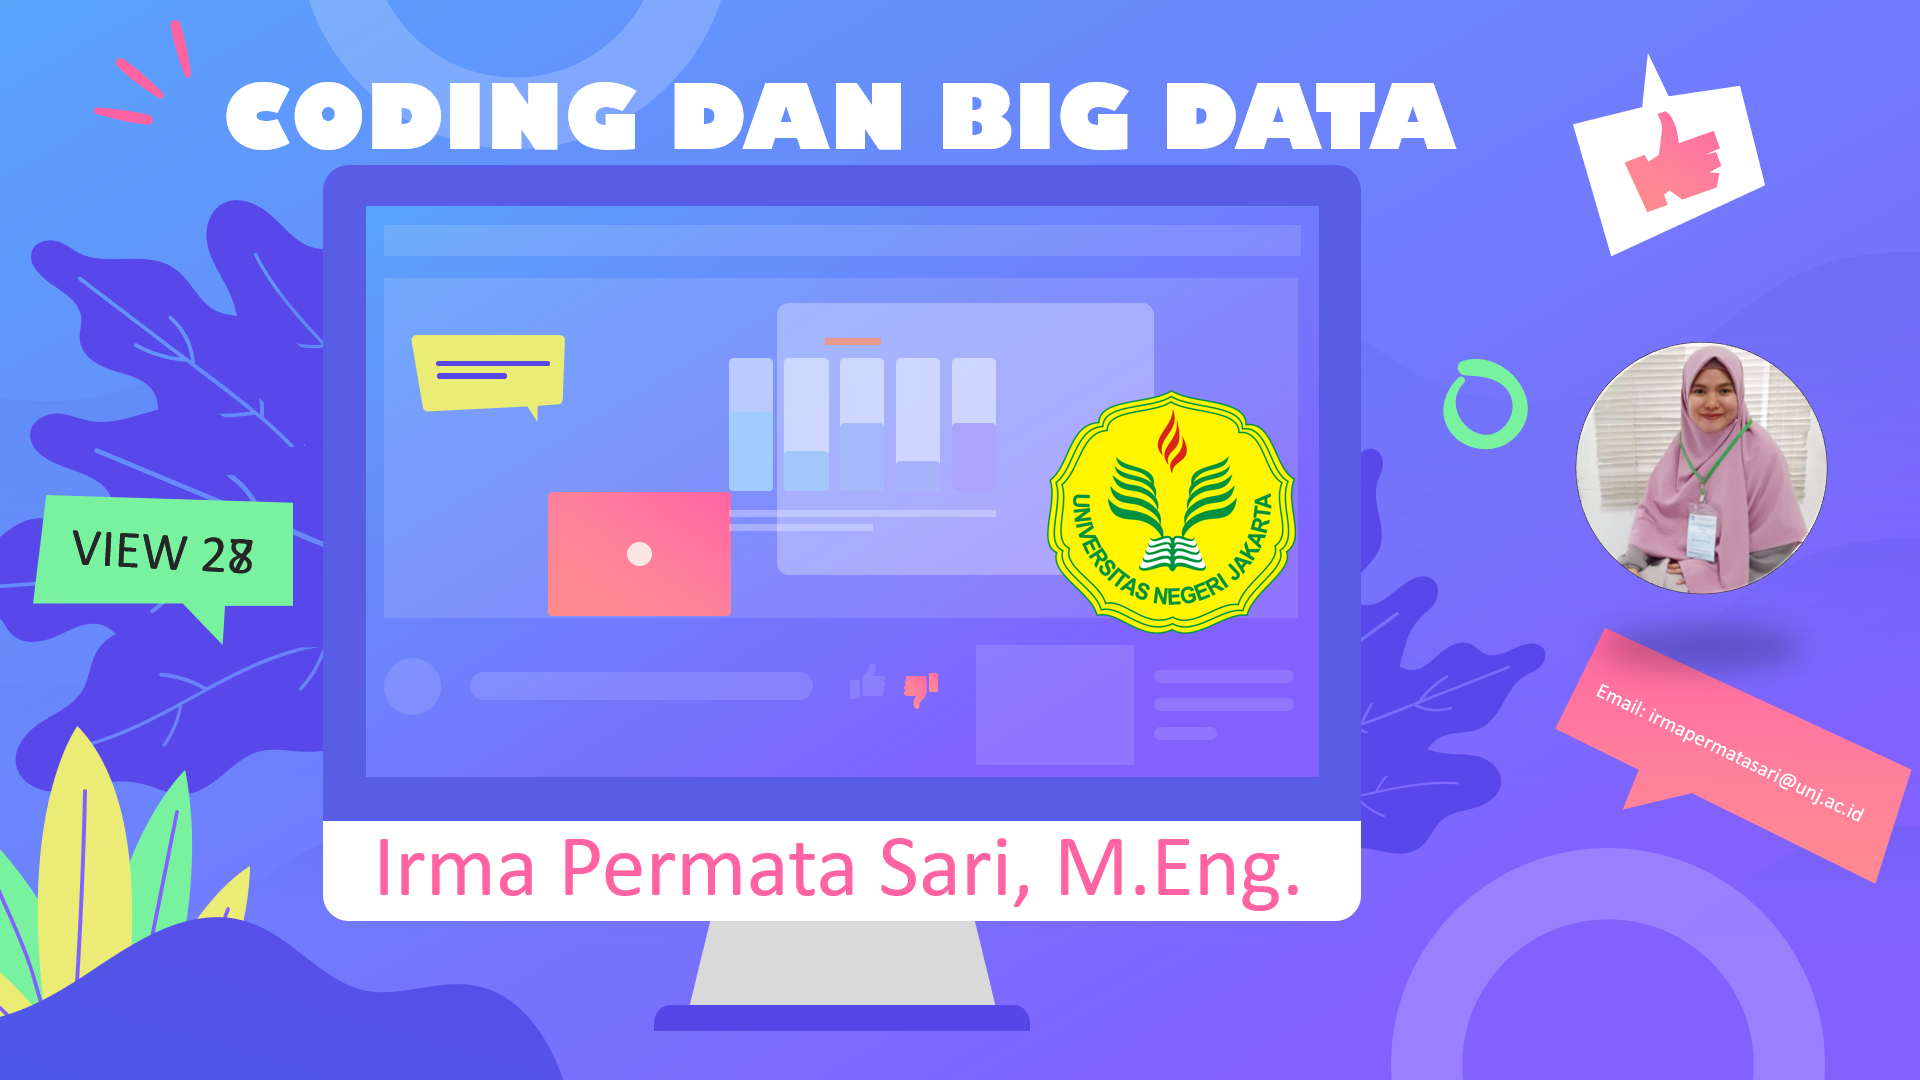 115 - Coding dan Big Data (Kelas B)